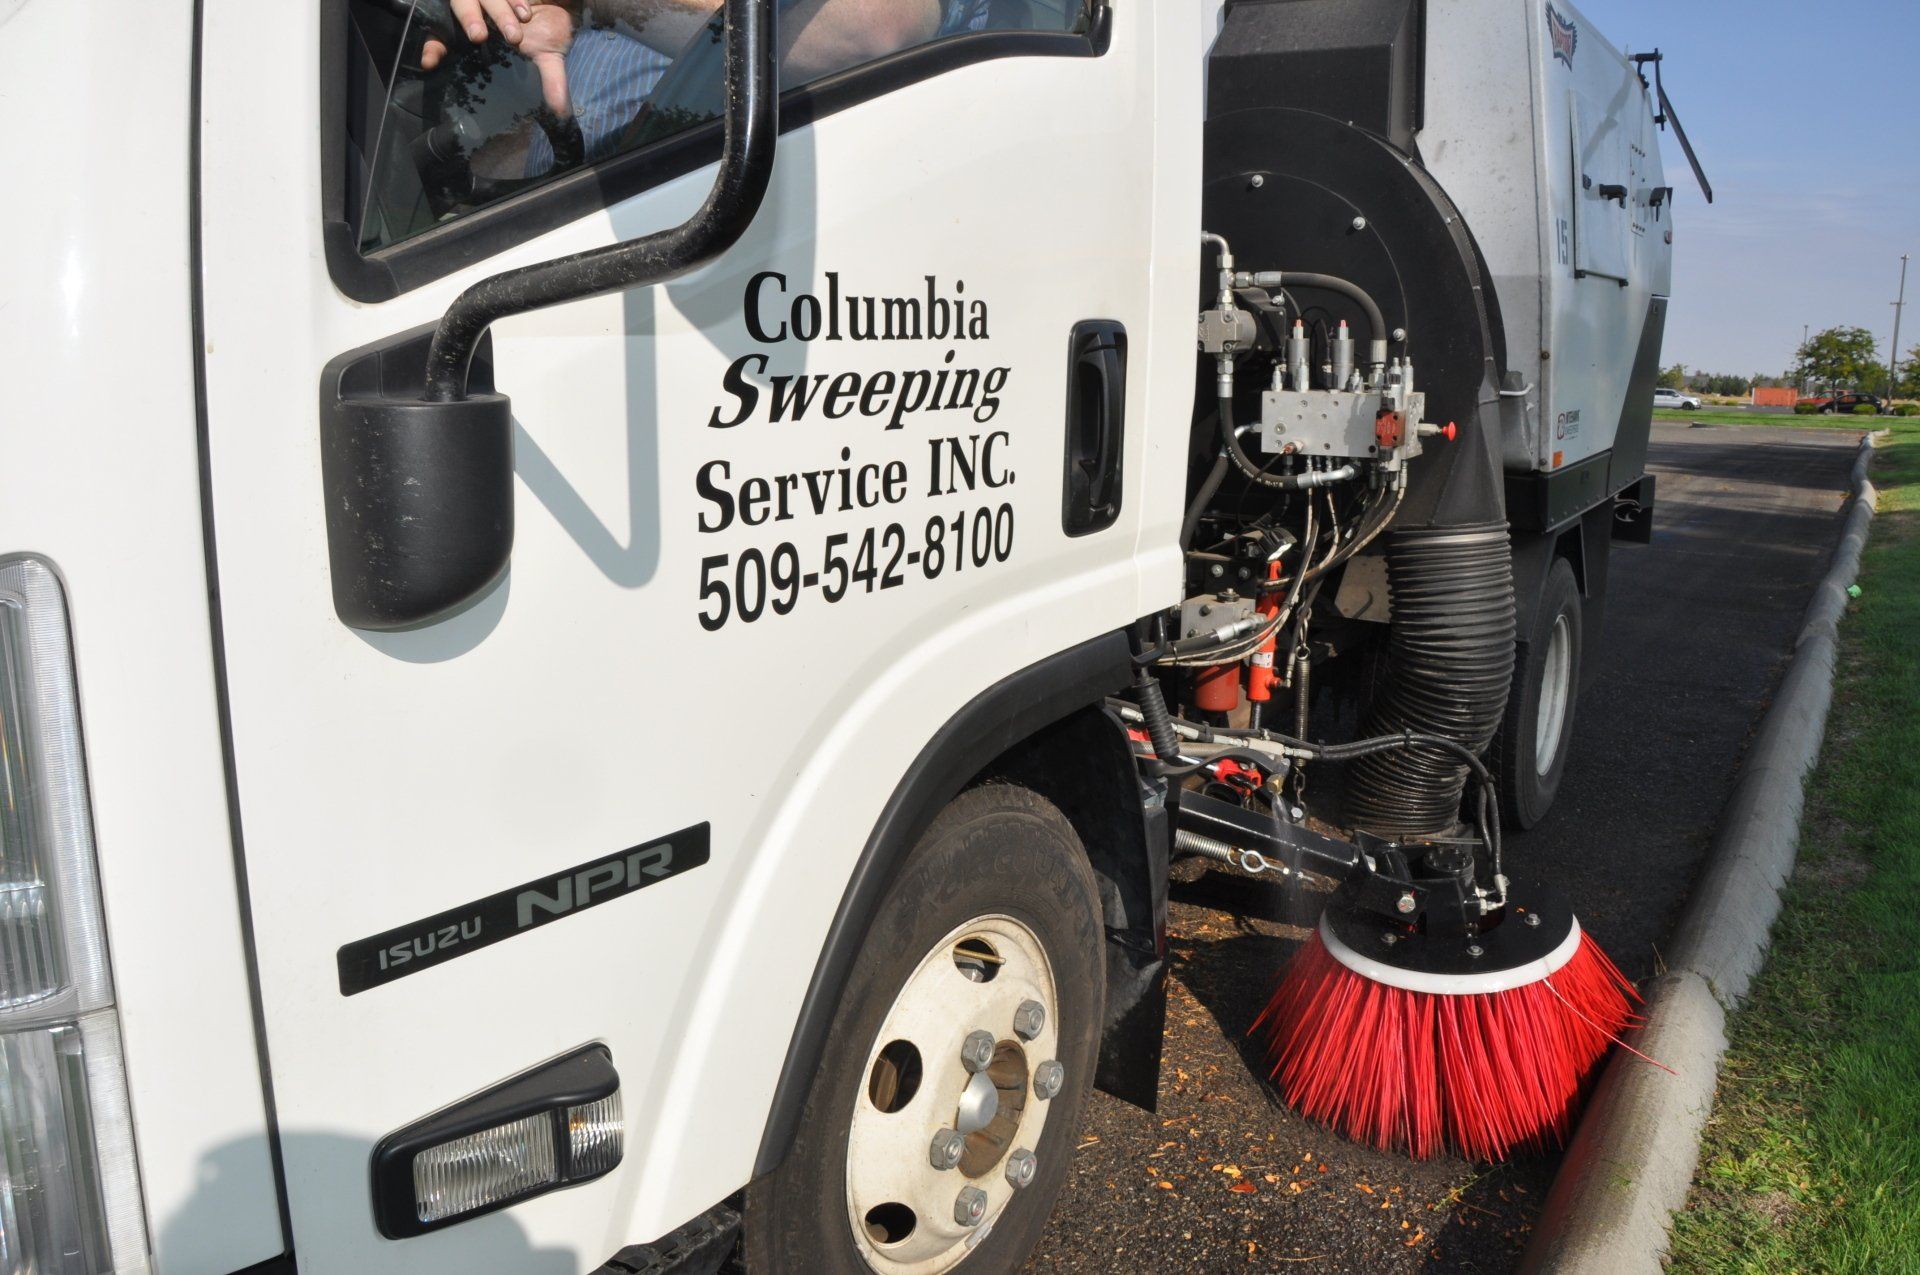 Sweeping Service Truck — Pasco, WA — Columbia Sweeping Service